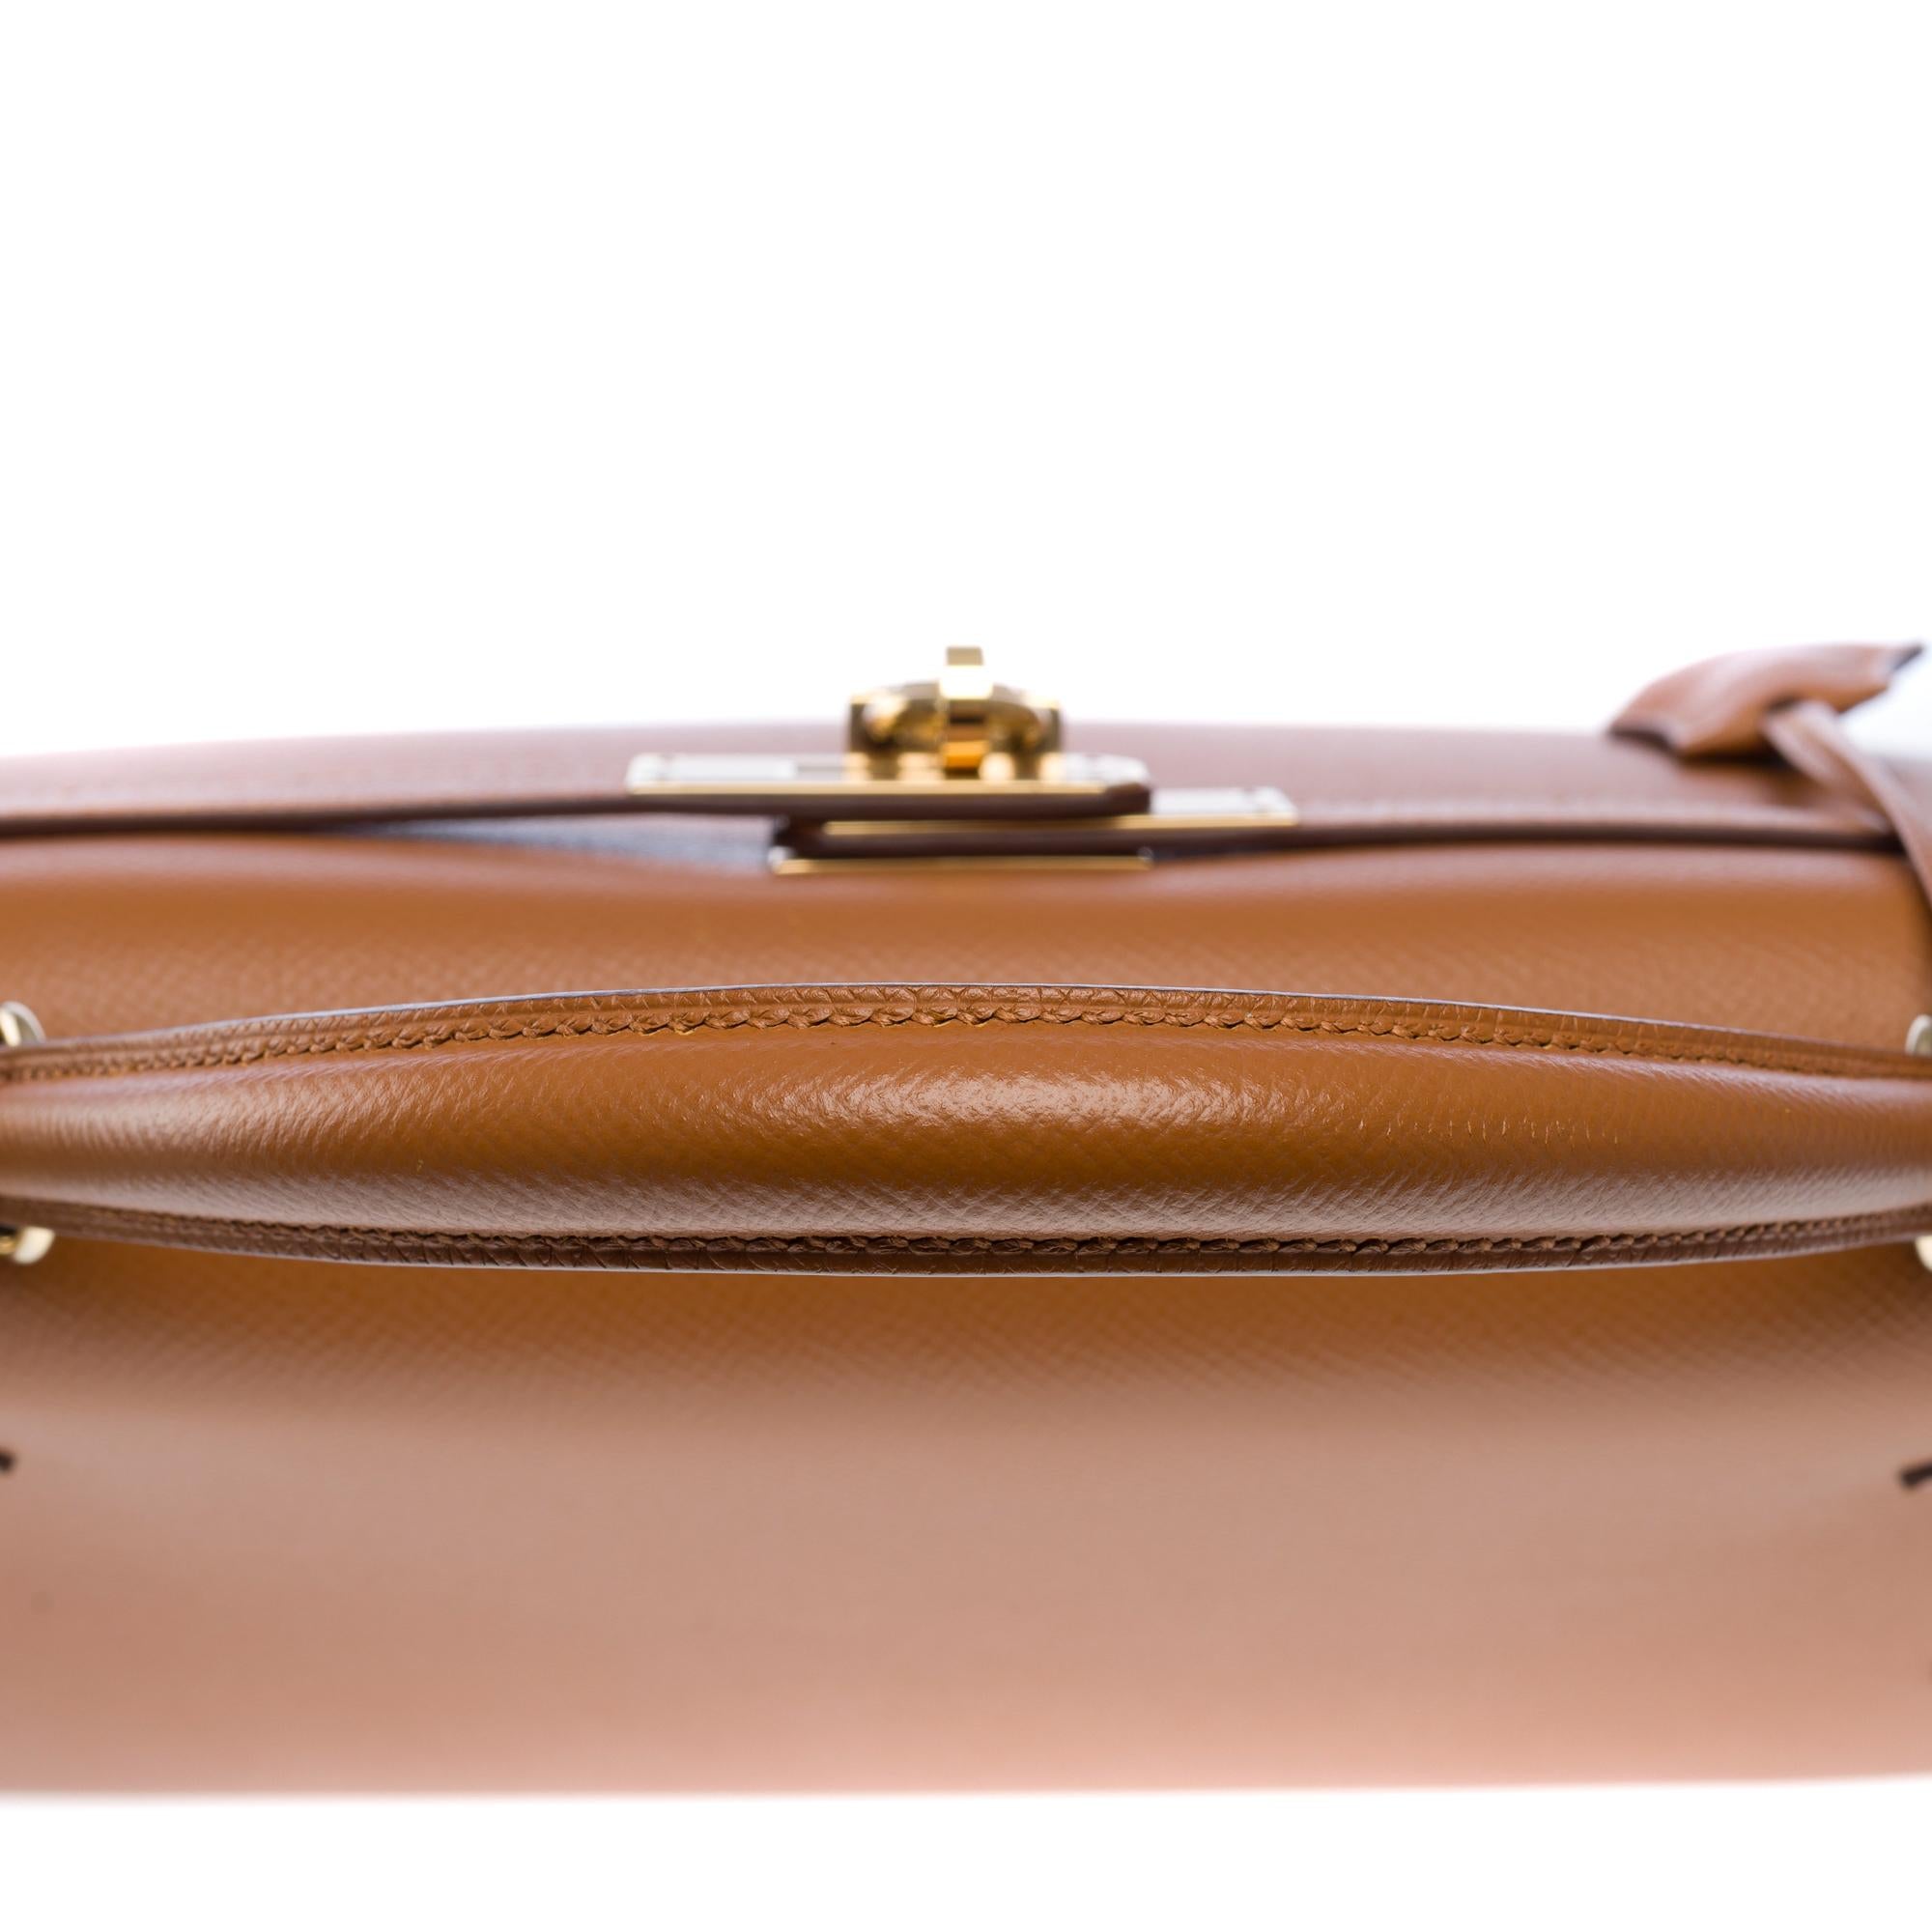 Hermès Kelly 32 sellier handbag strap (HSO) in Camel & Orange Epsom leather, GHW For Sale 6